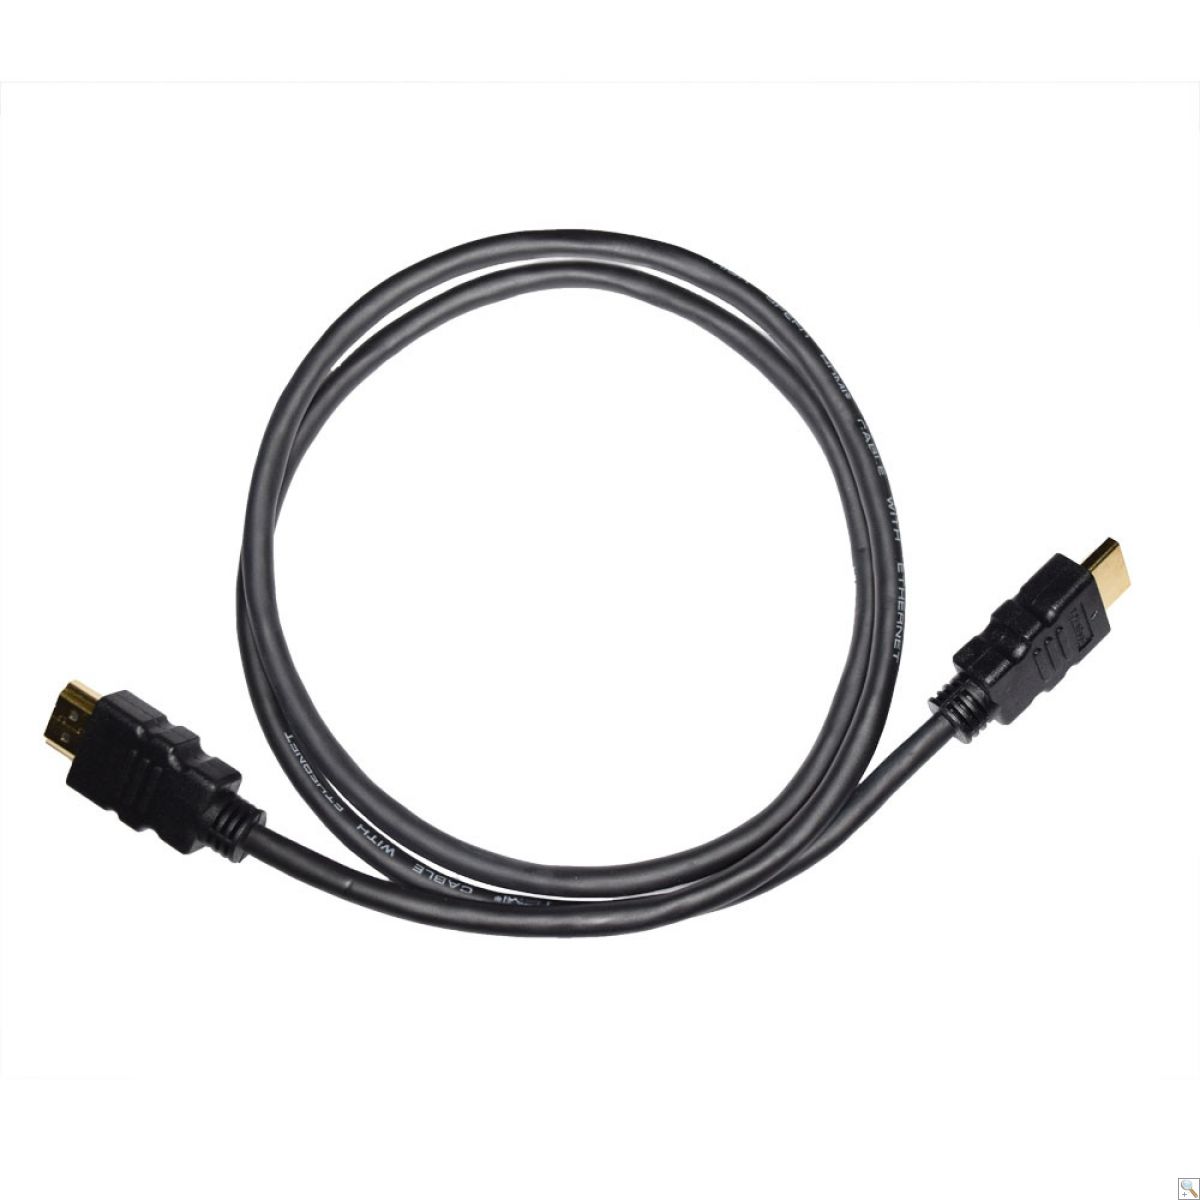 HDMI Cable - 15M